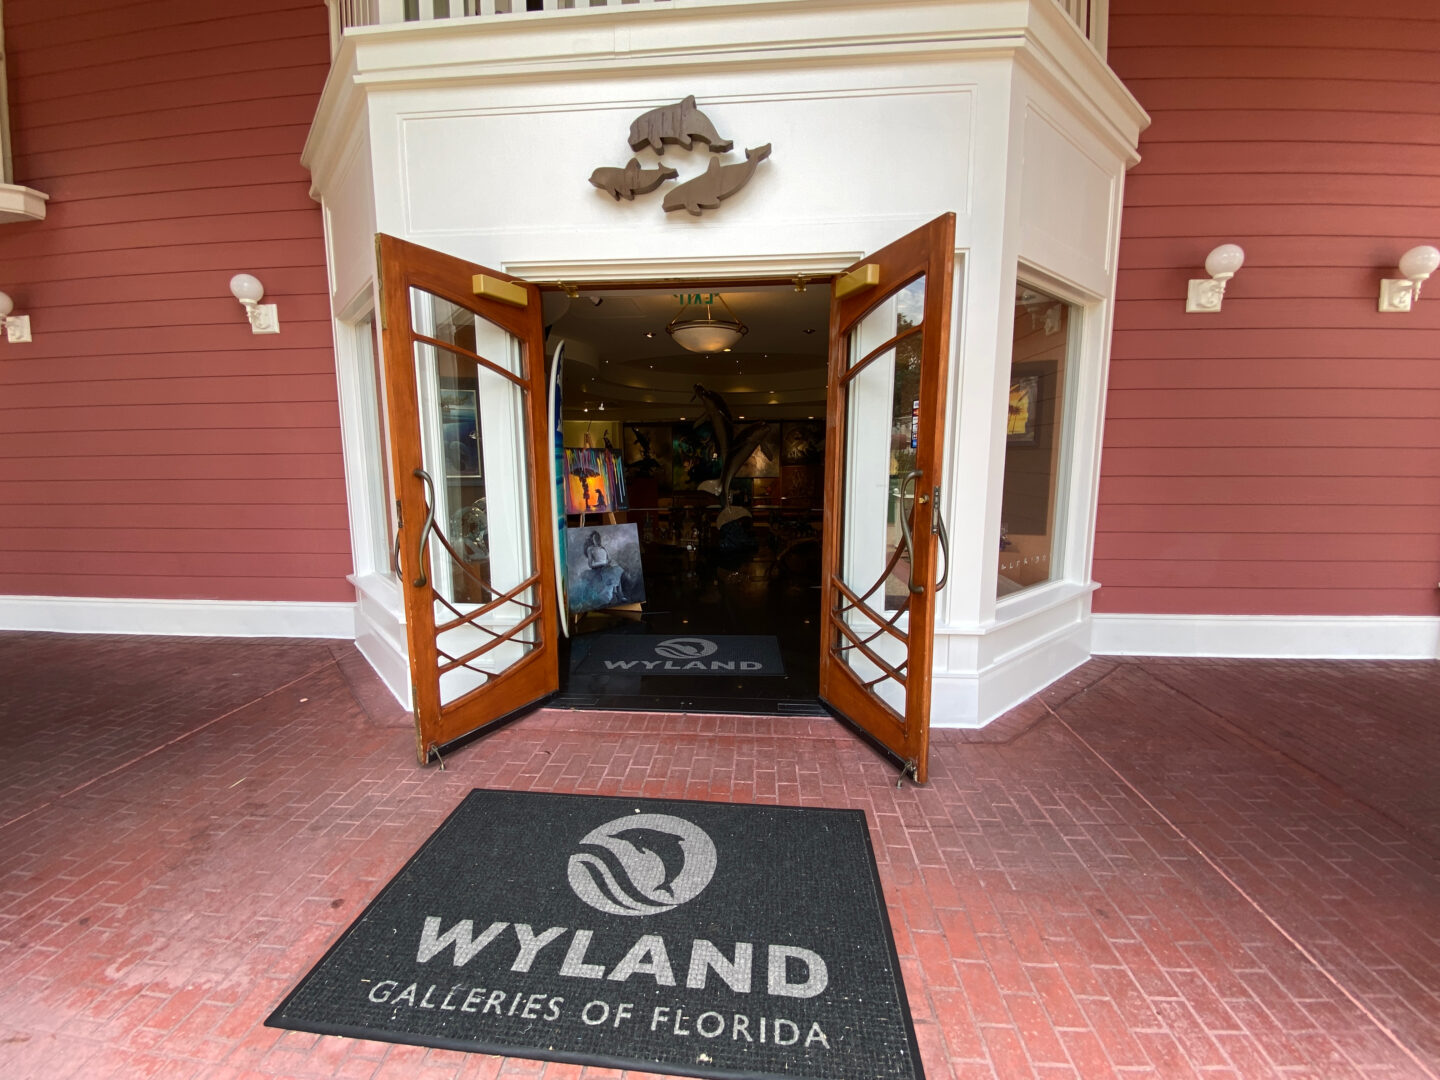 The Wyland Galleries of Florida at Disney's Boardwalk